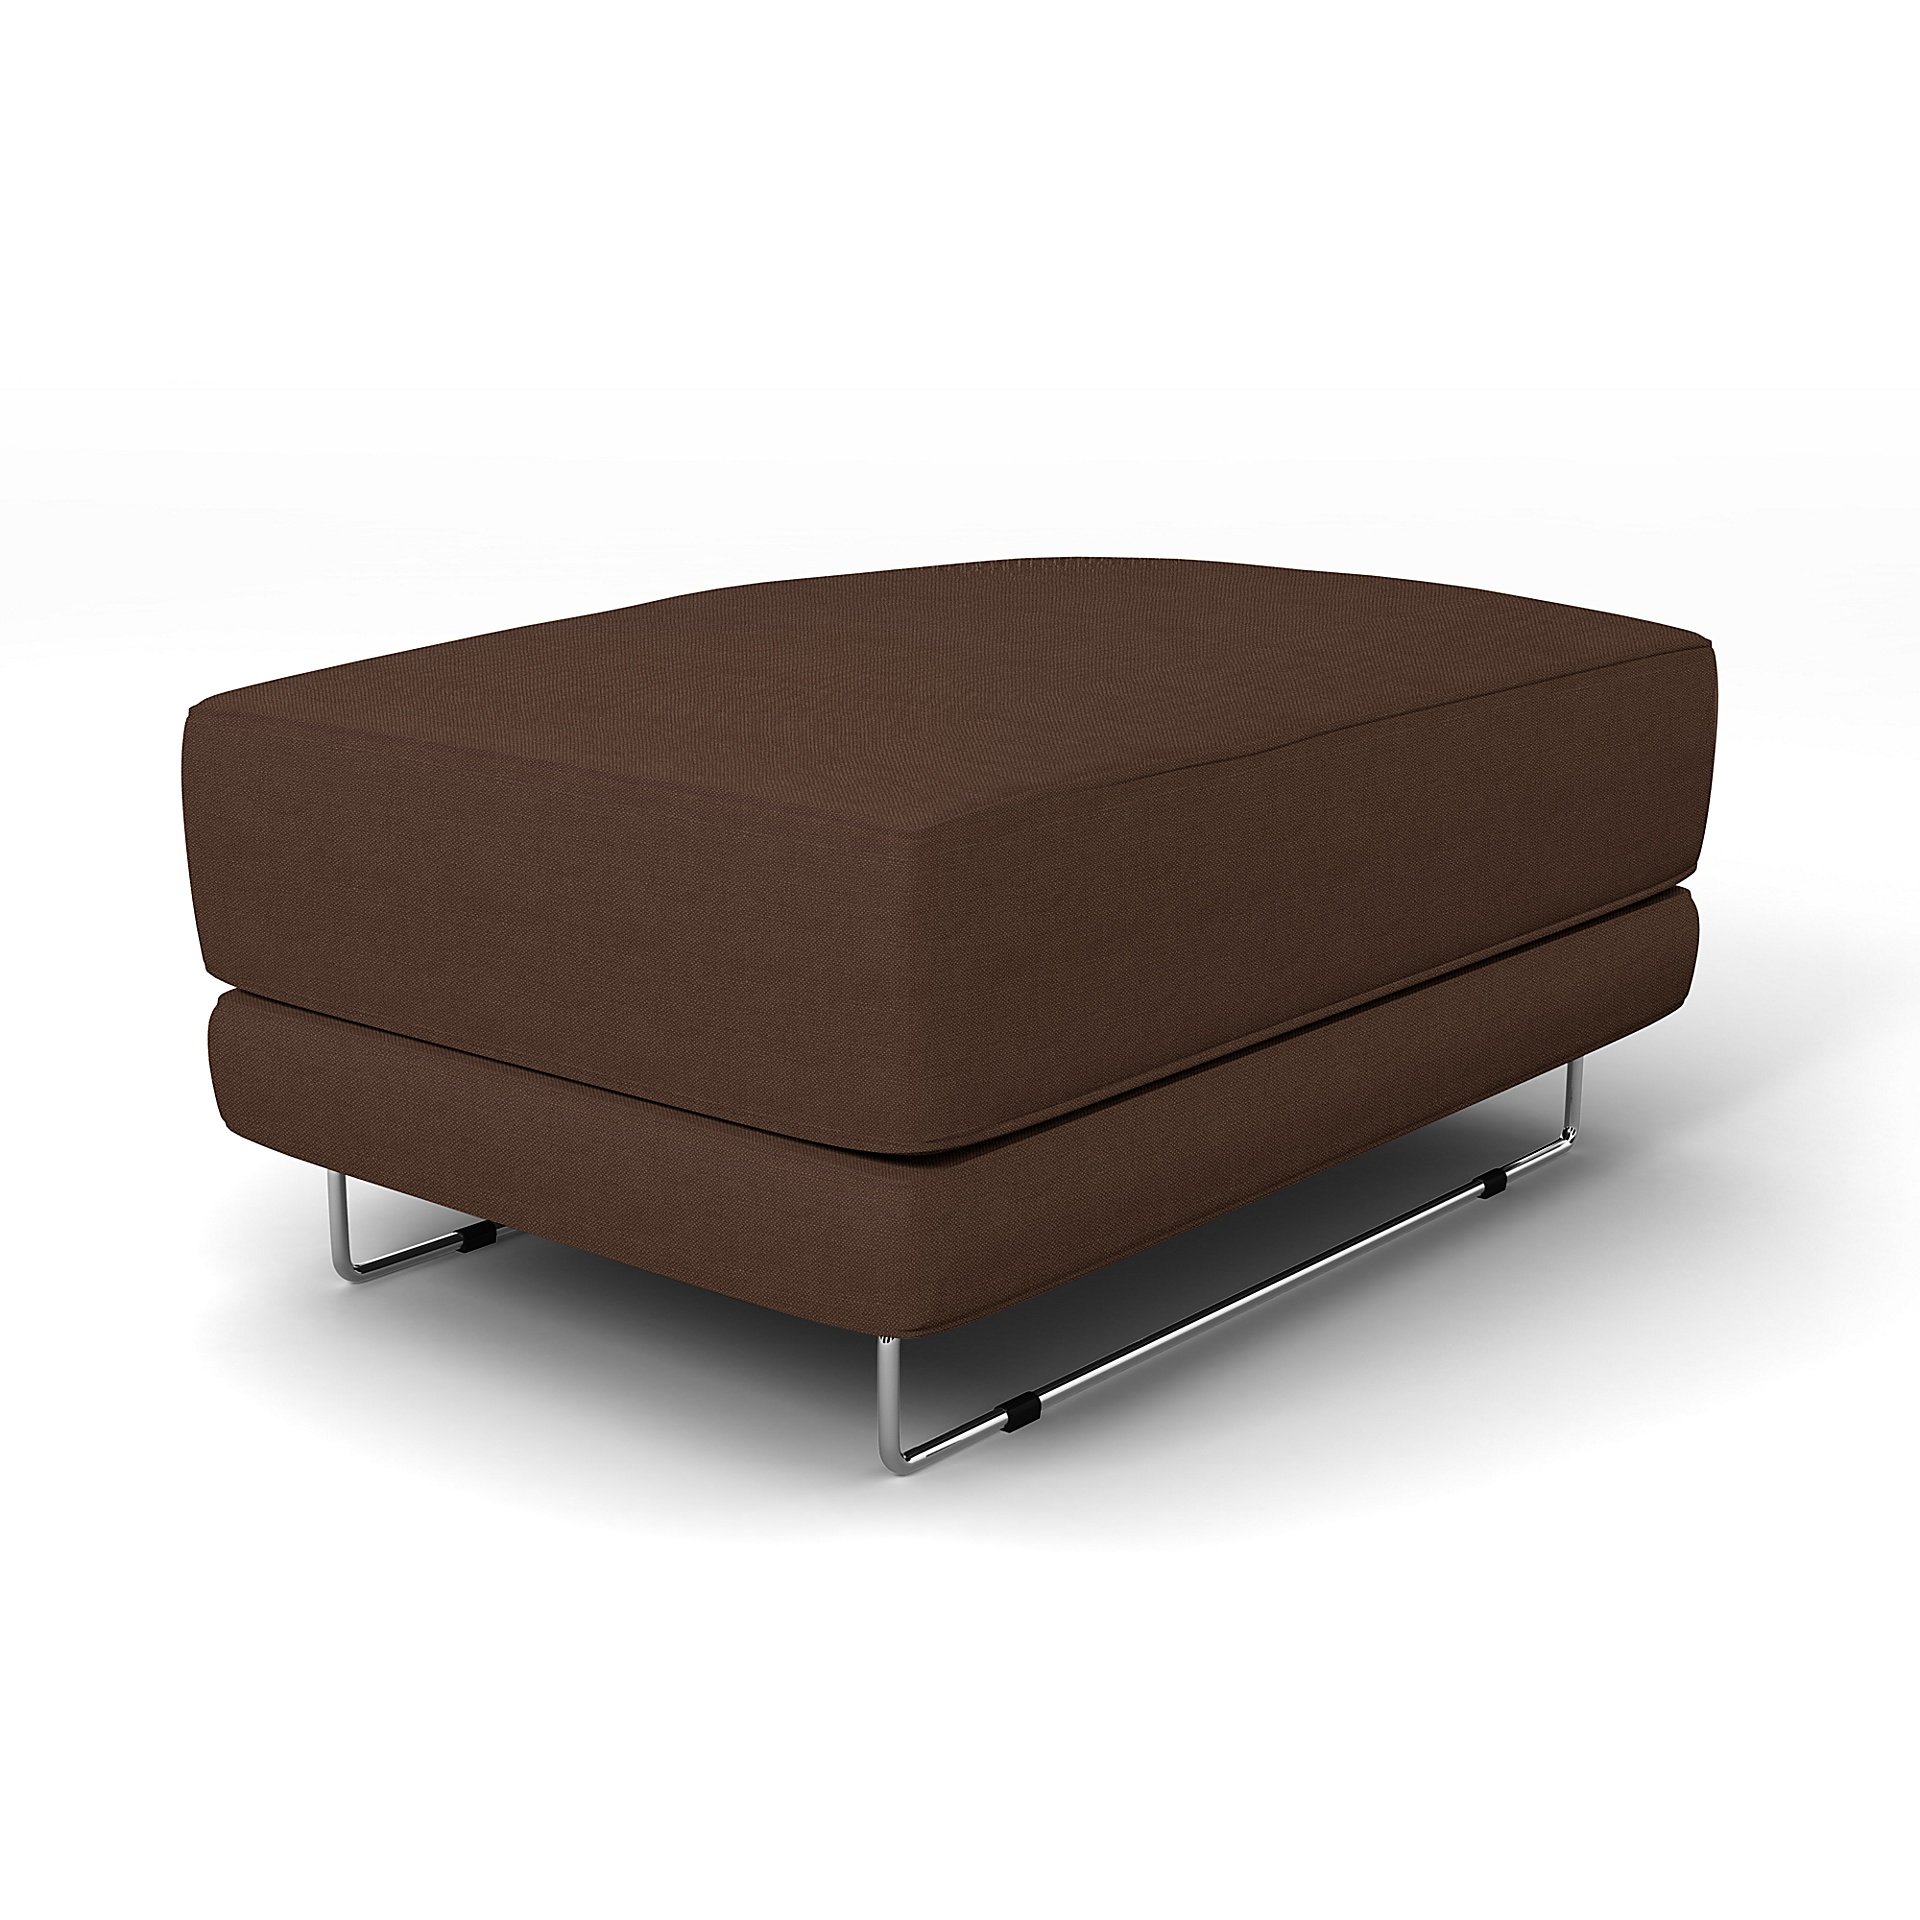 IKEA - Tylosand Footstool Cover, Chocolate, Linen - Bemz